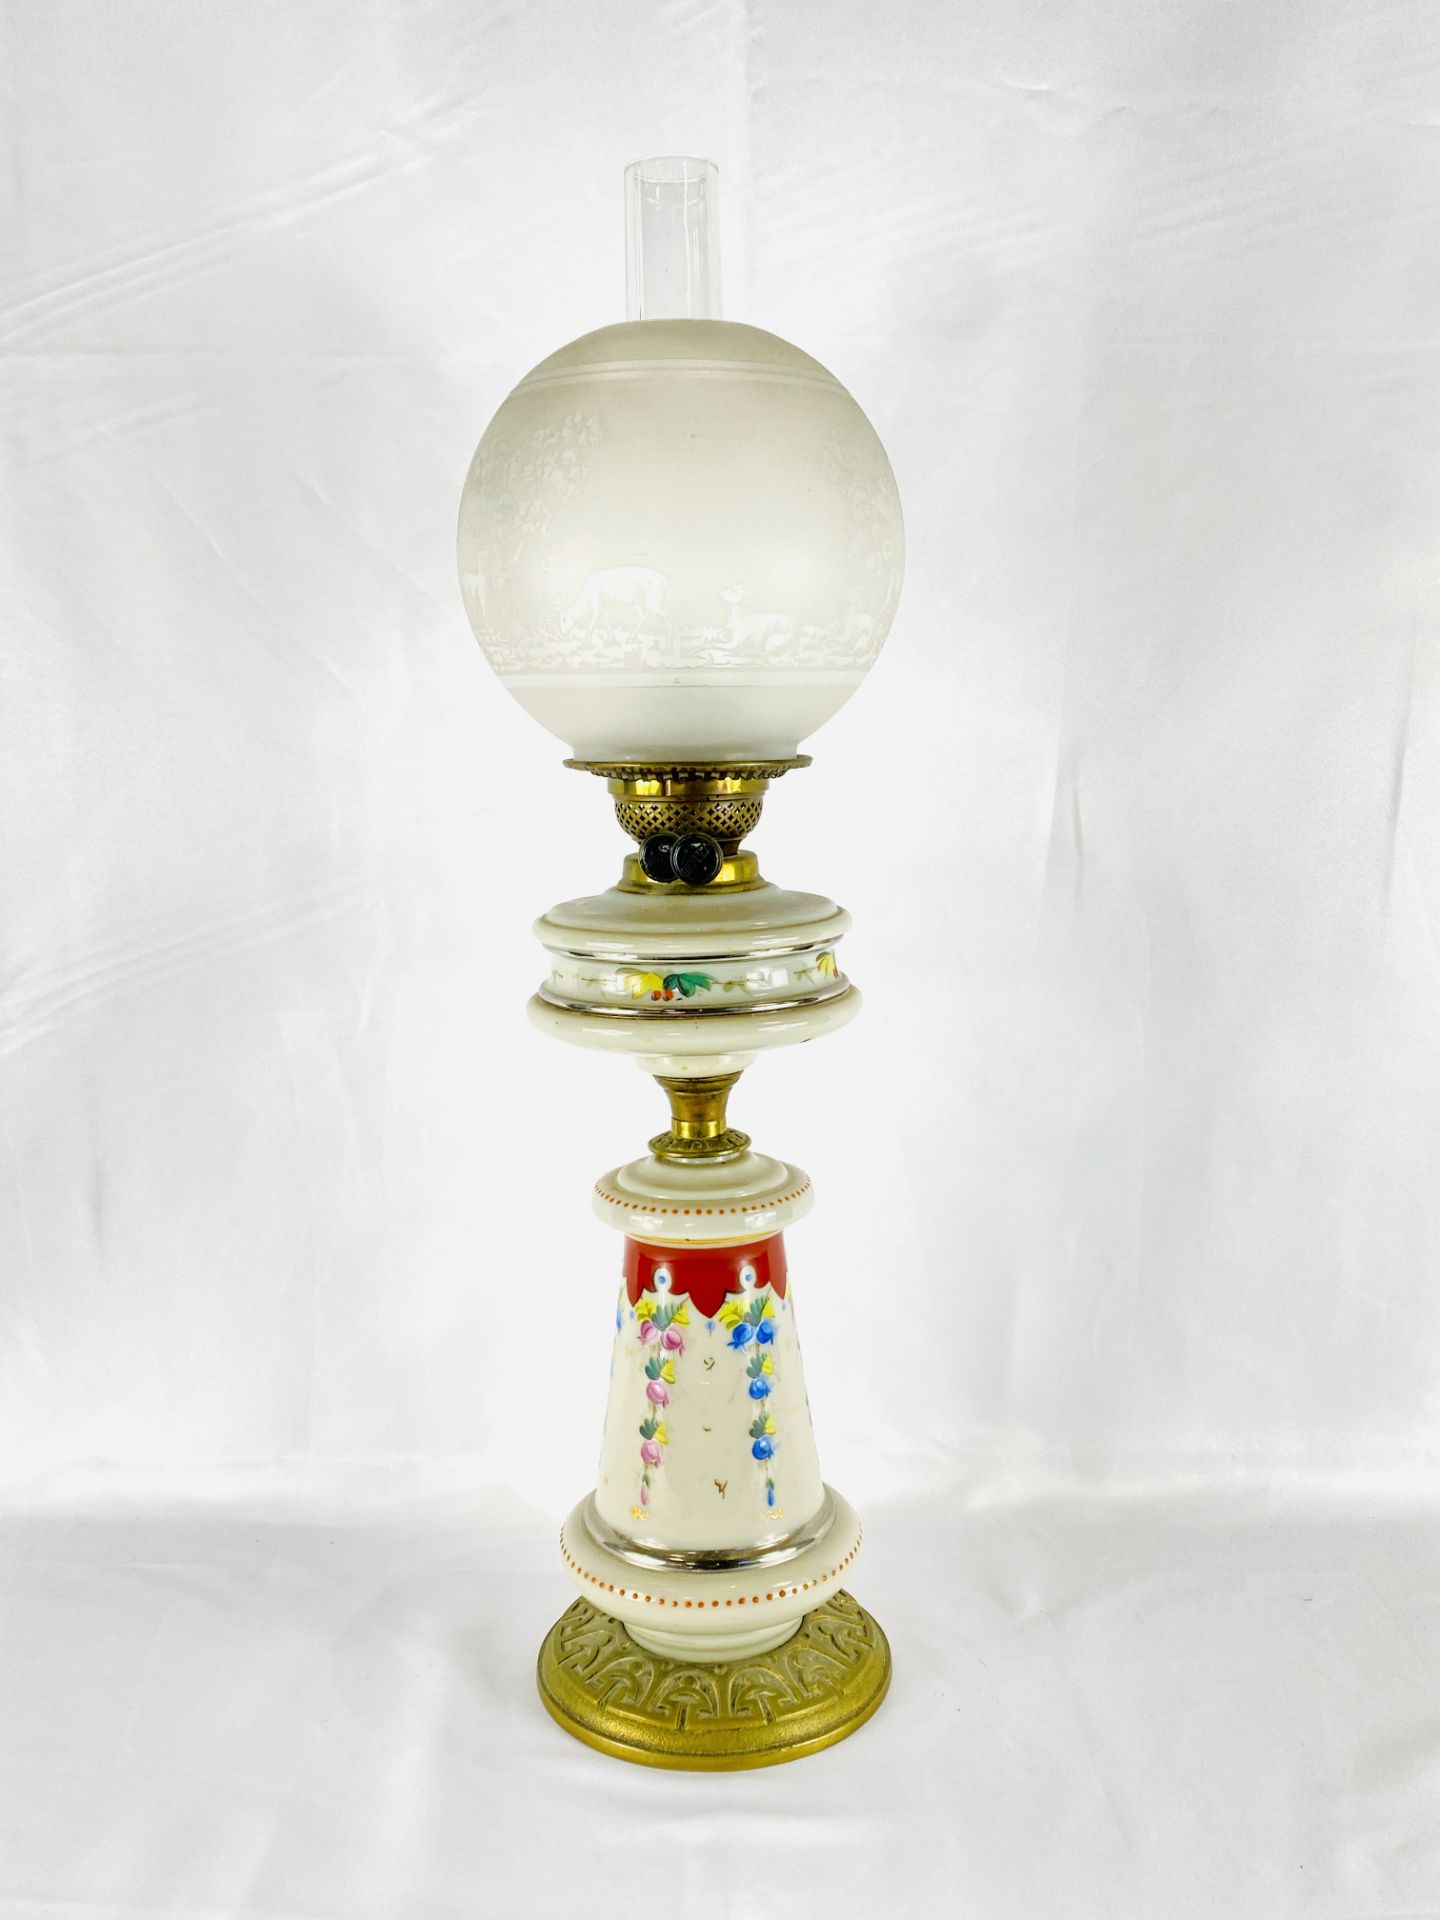 Ceramic oil lamp - Image 2 of 4